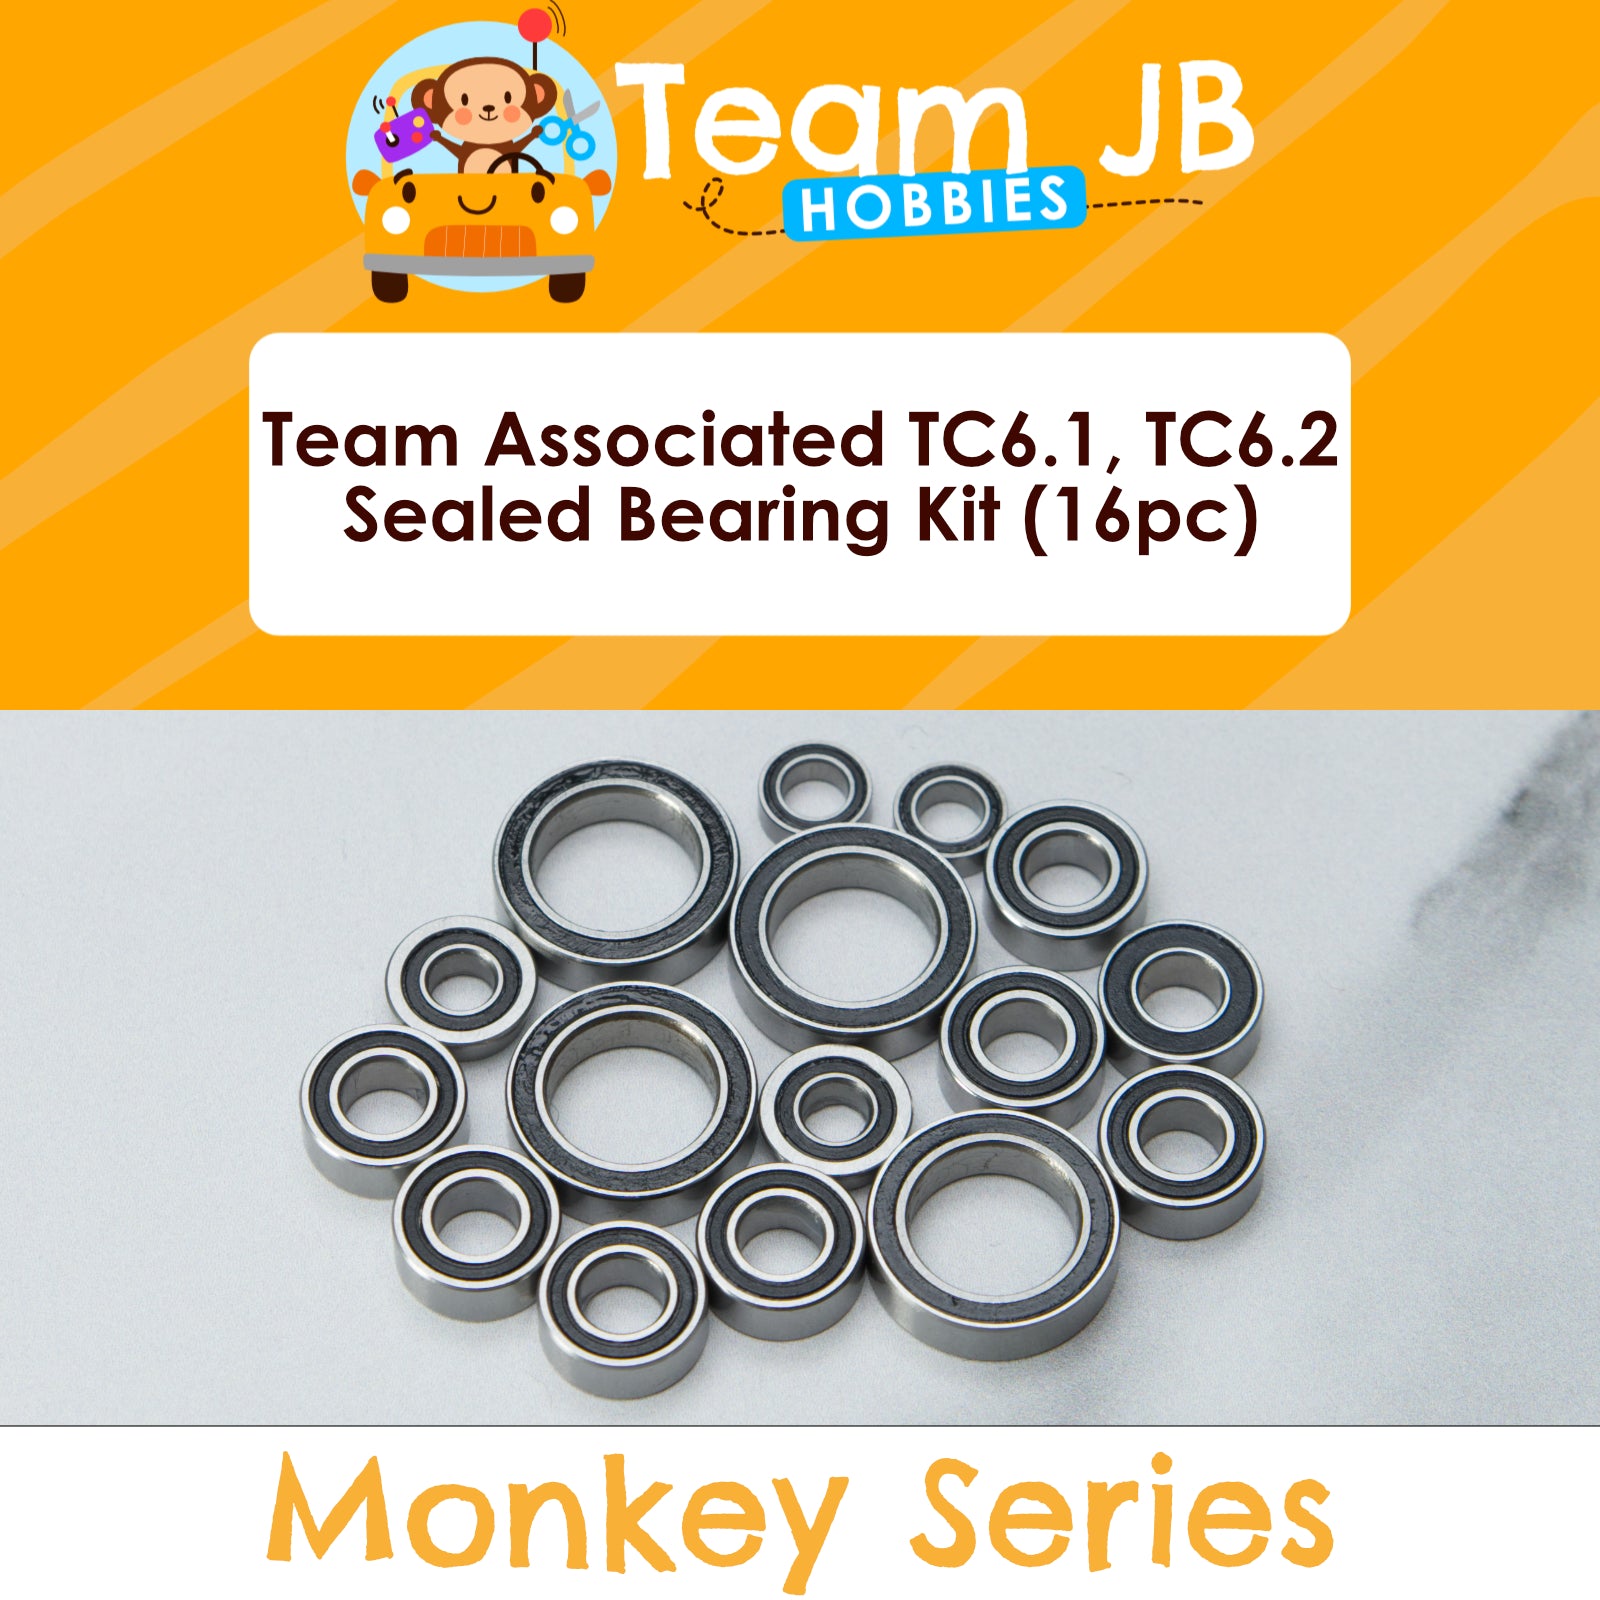 Team Associated TC6.1, TC6.2 - Sealed Bearing Kit